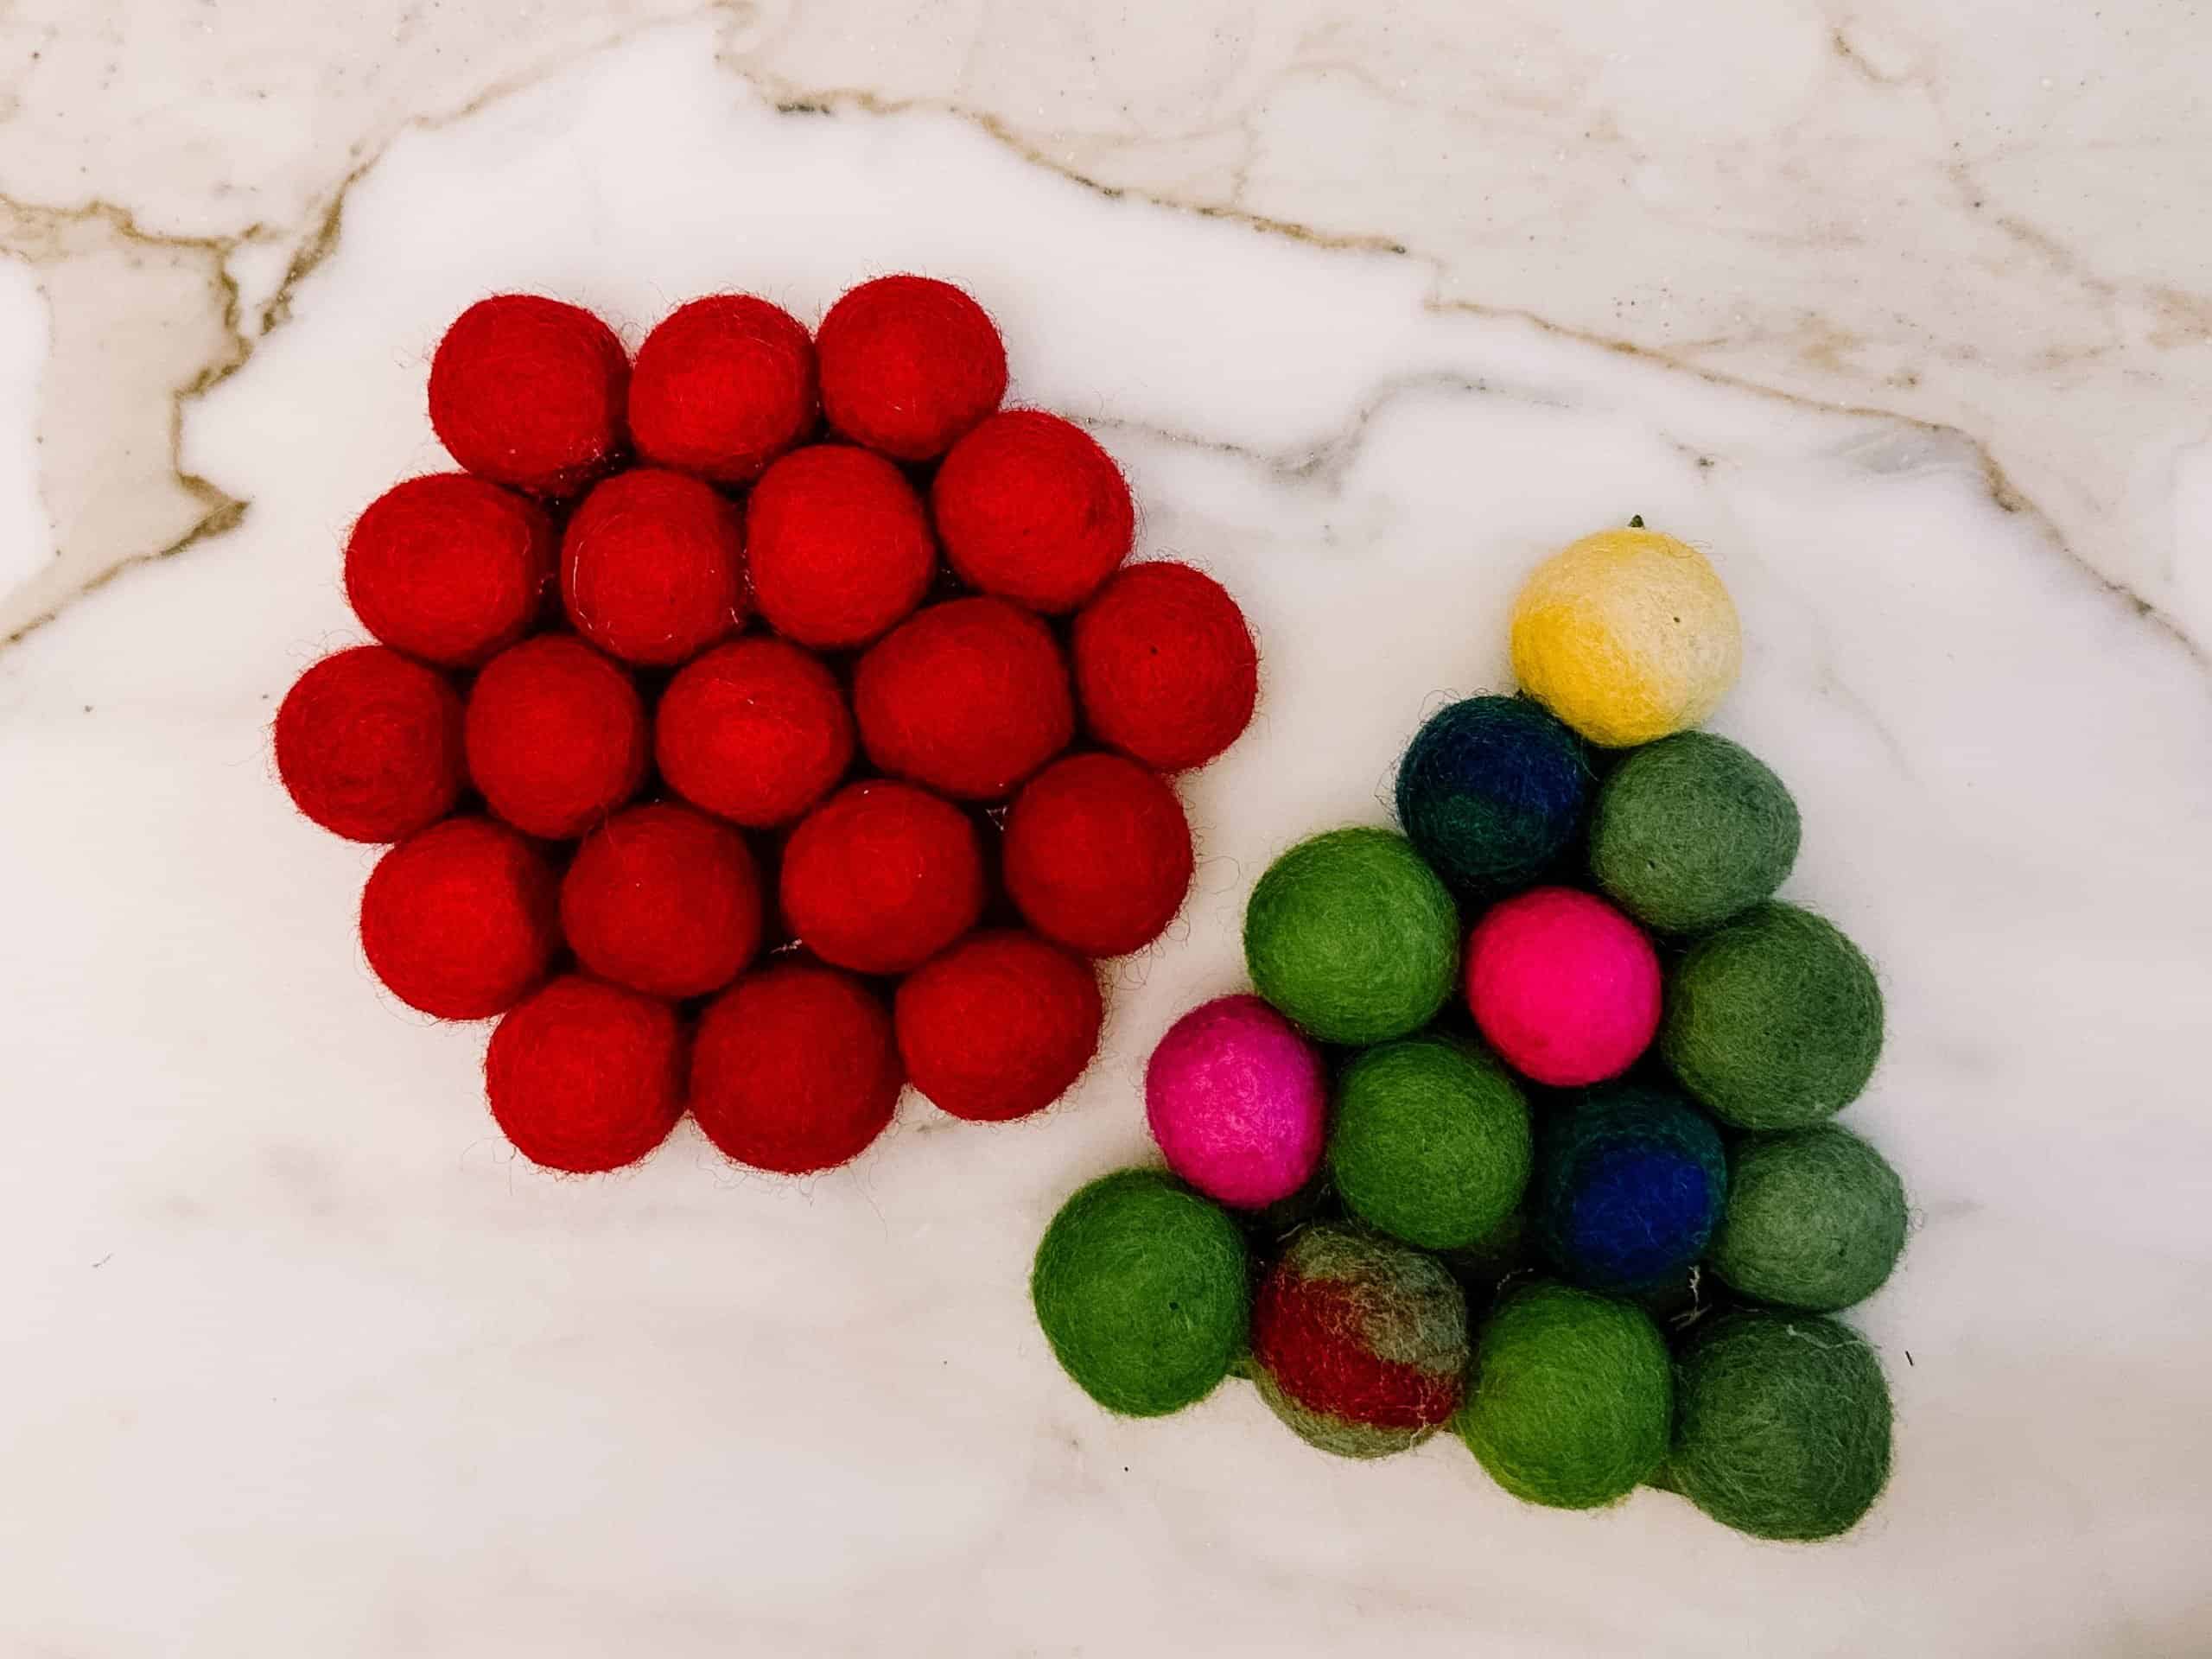 How to Make Felt Christmas Coasters with Felt Balls